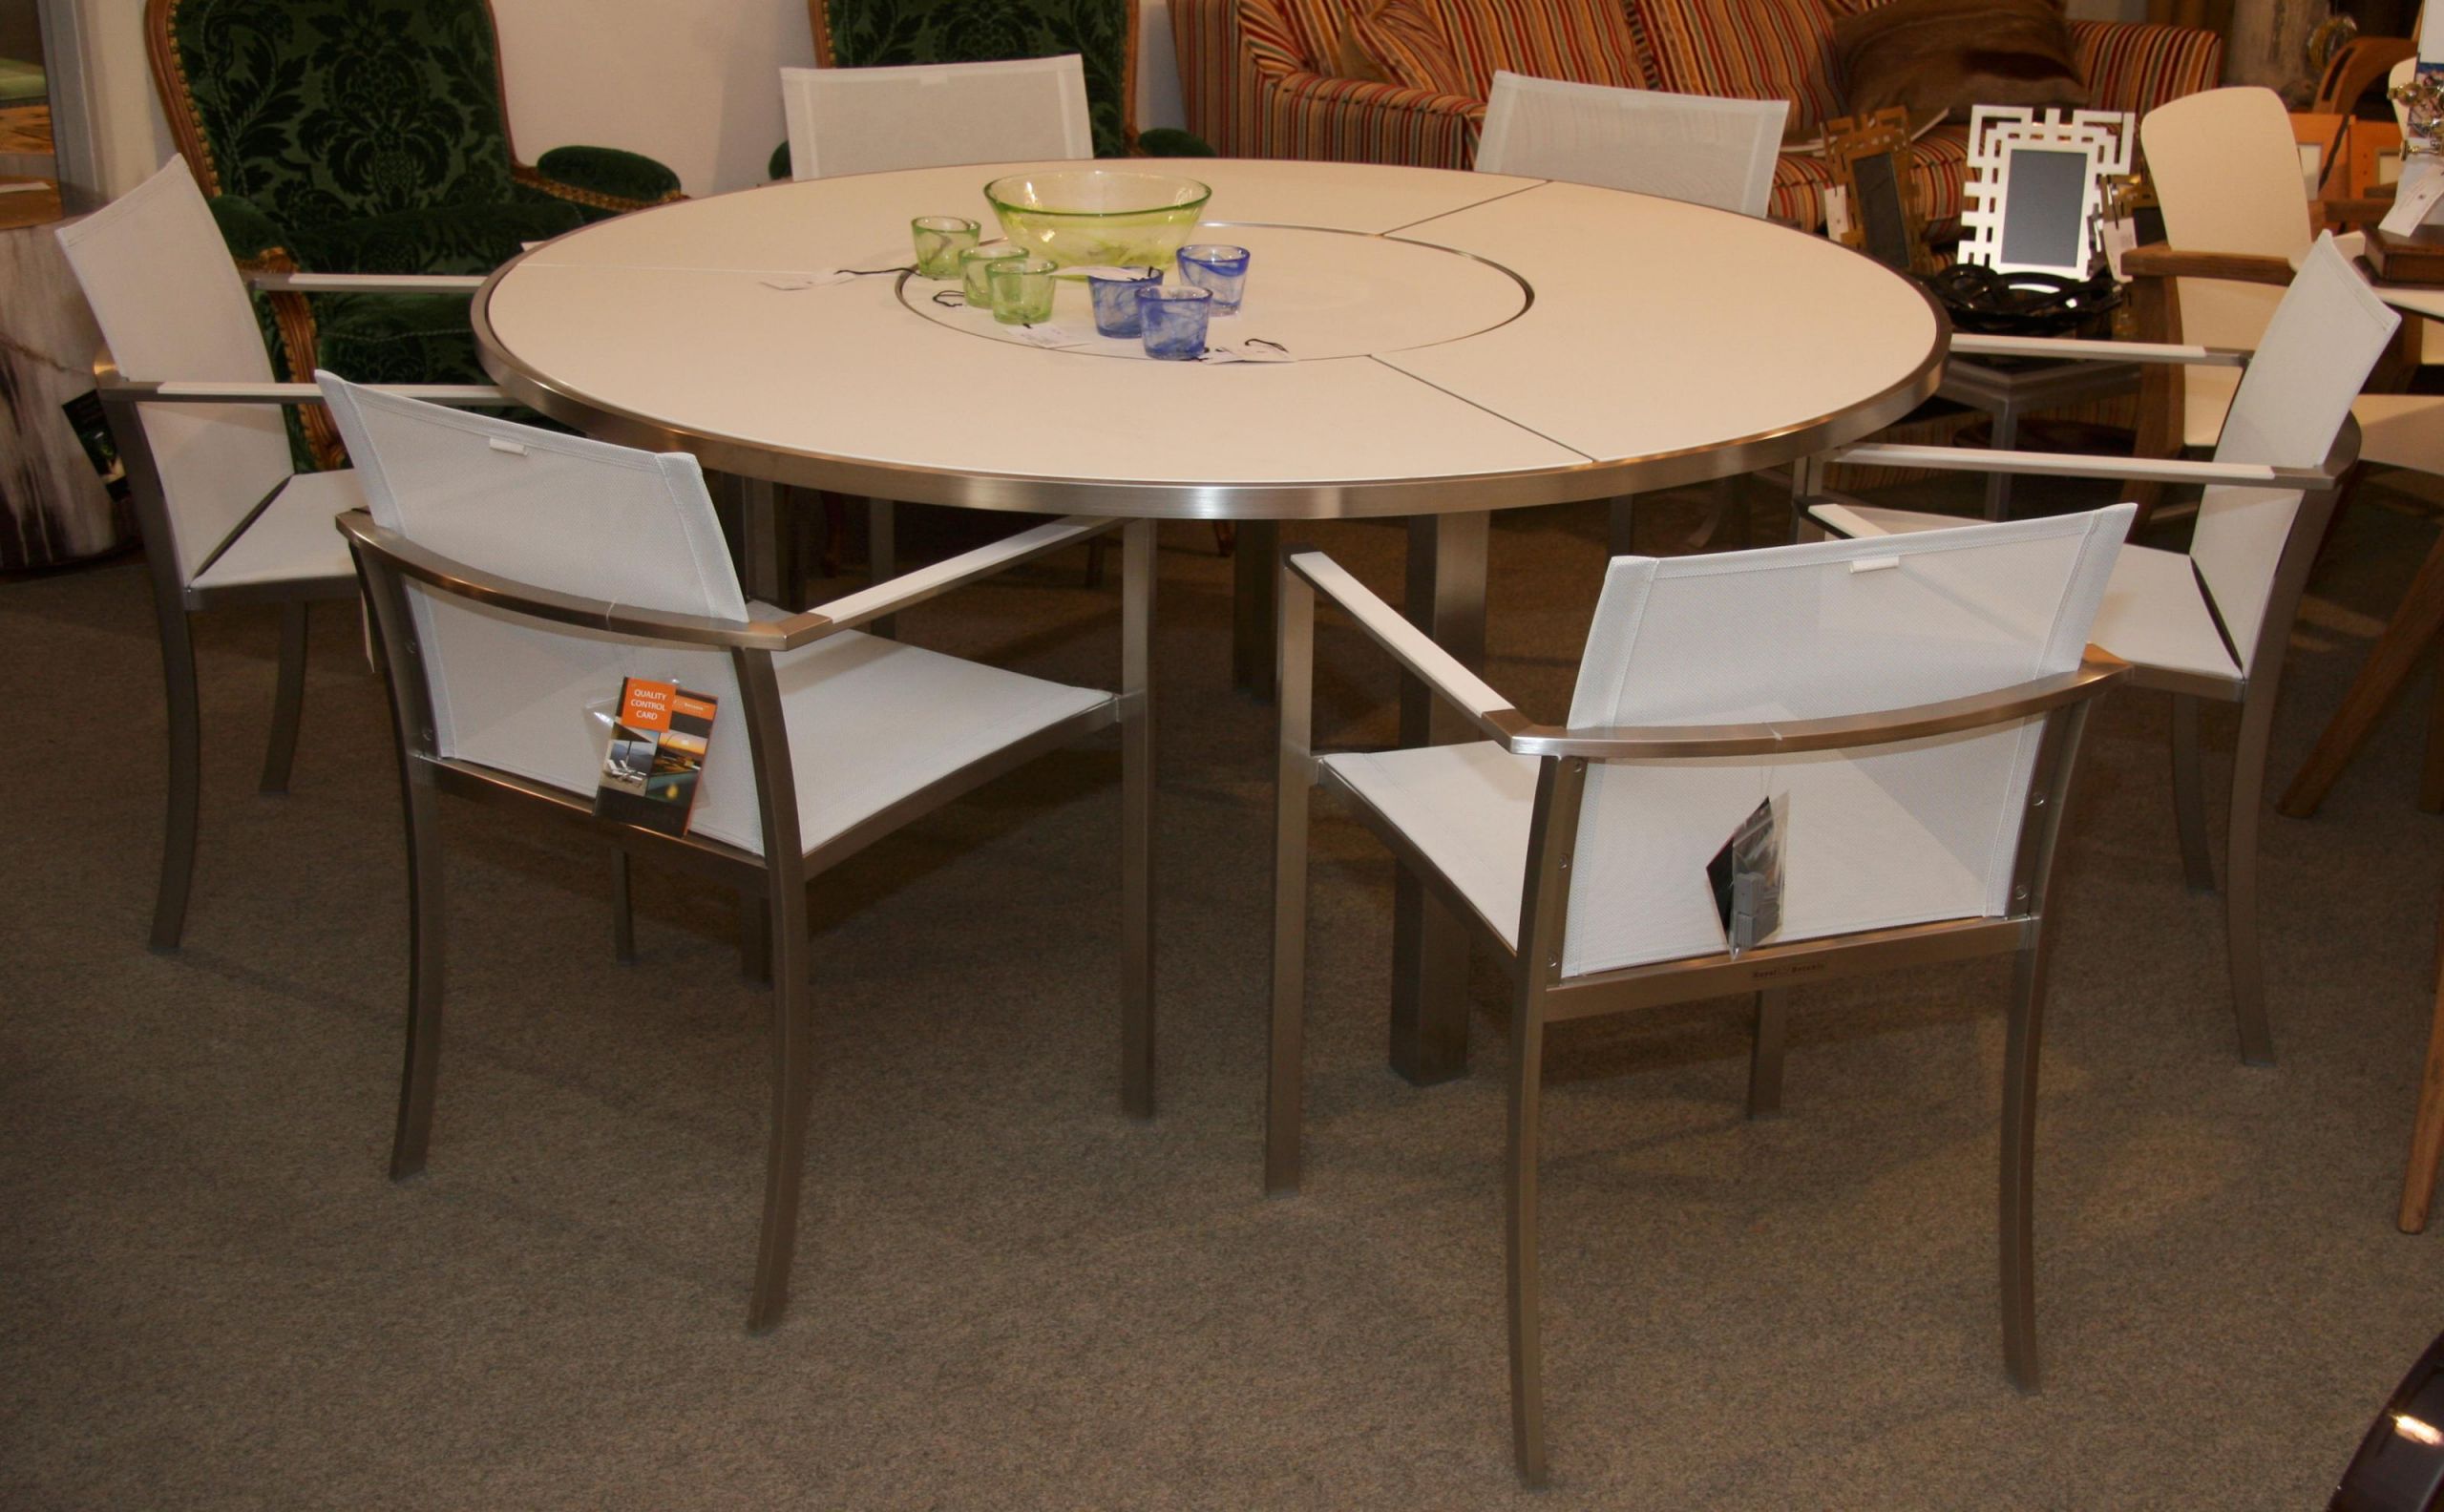 img original ensemble mobilier royal botania pour terrasse jardin pose une table ronde zon avec pietement neuf